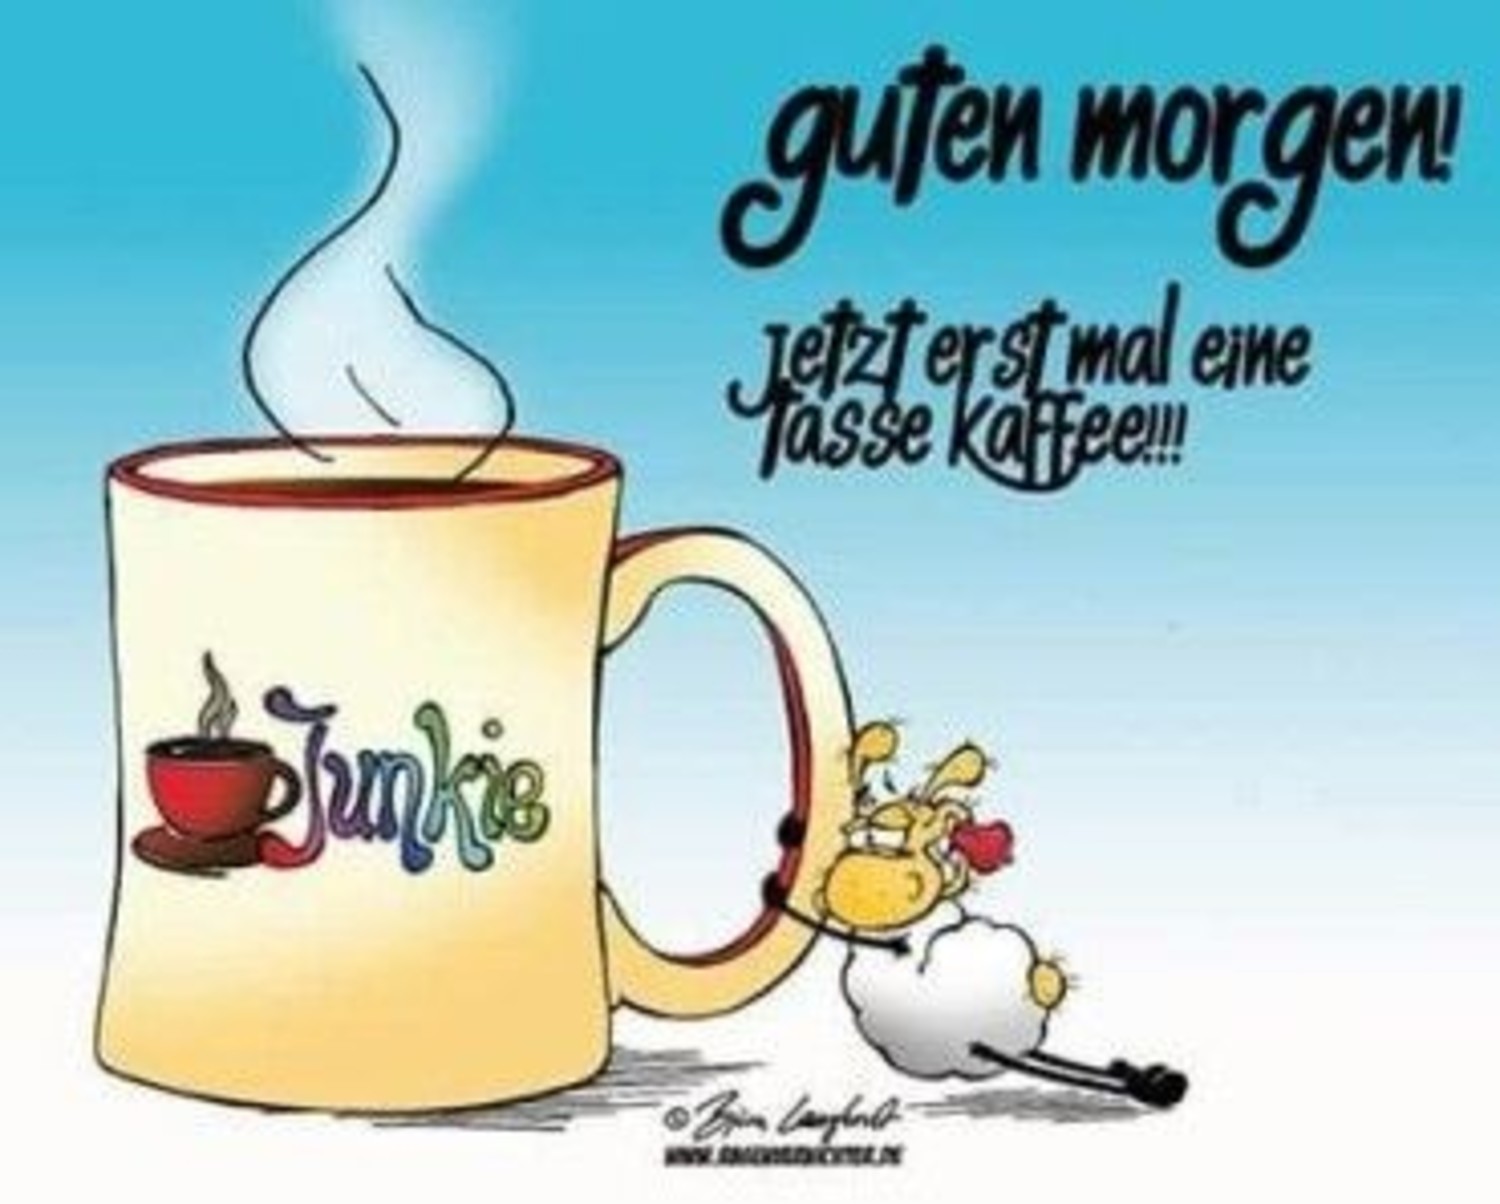 Guten Morgen Kaffee Related Keywords & Suggestions - Guten M